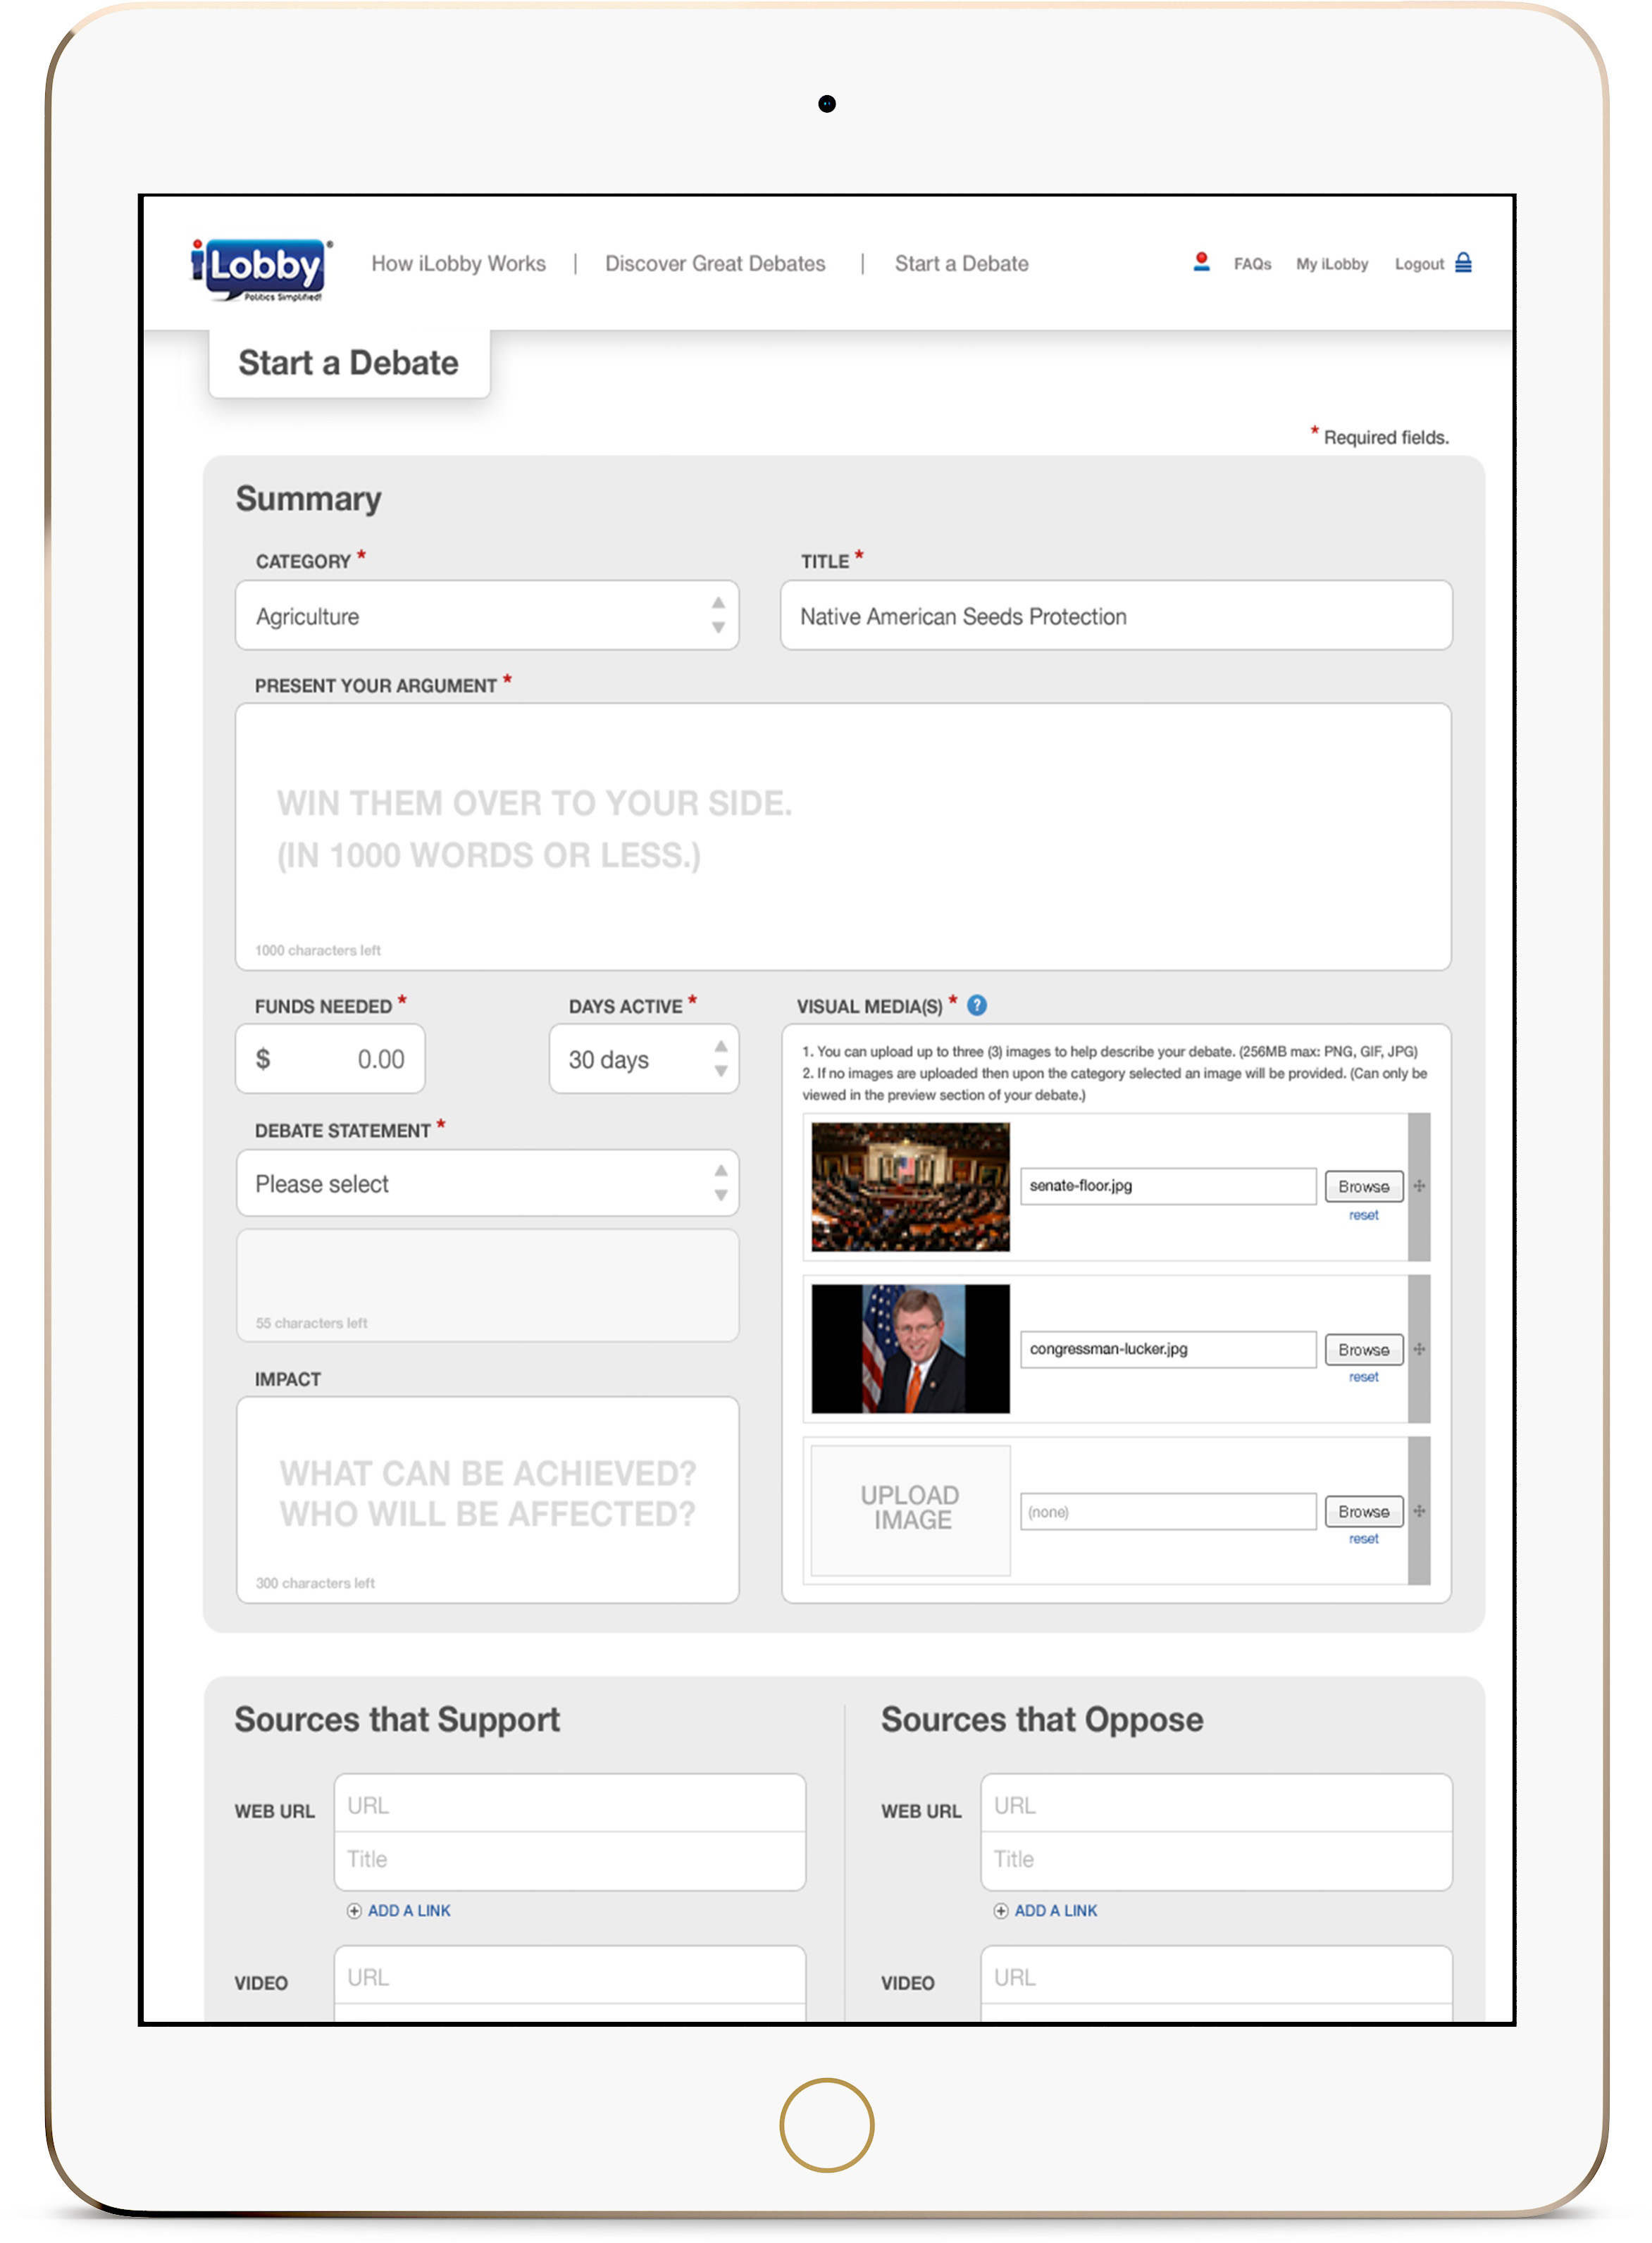 iLobby Contact page on iPad